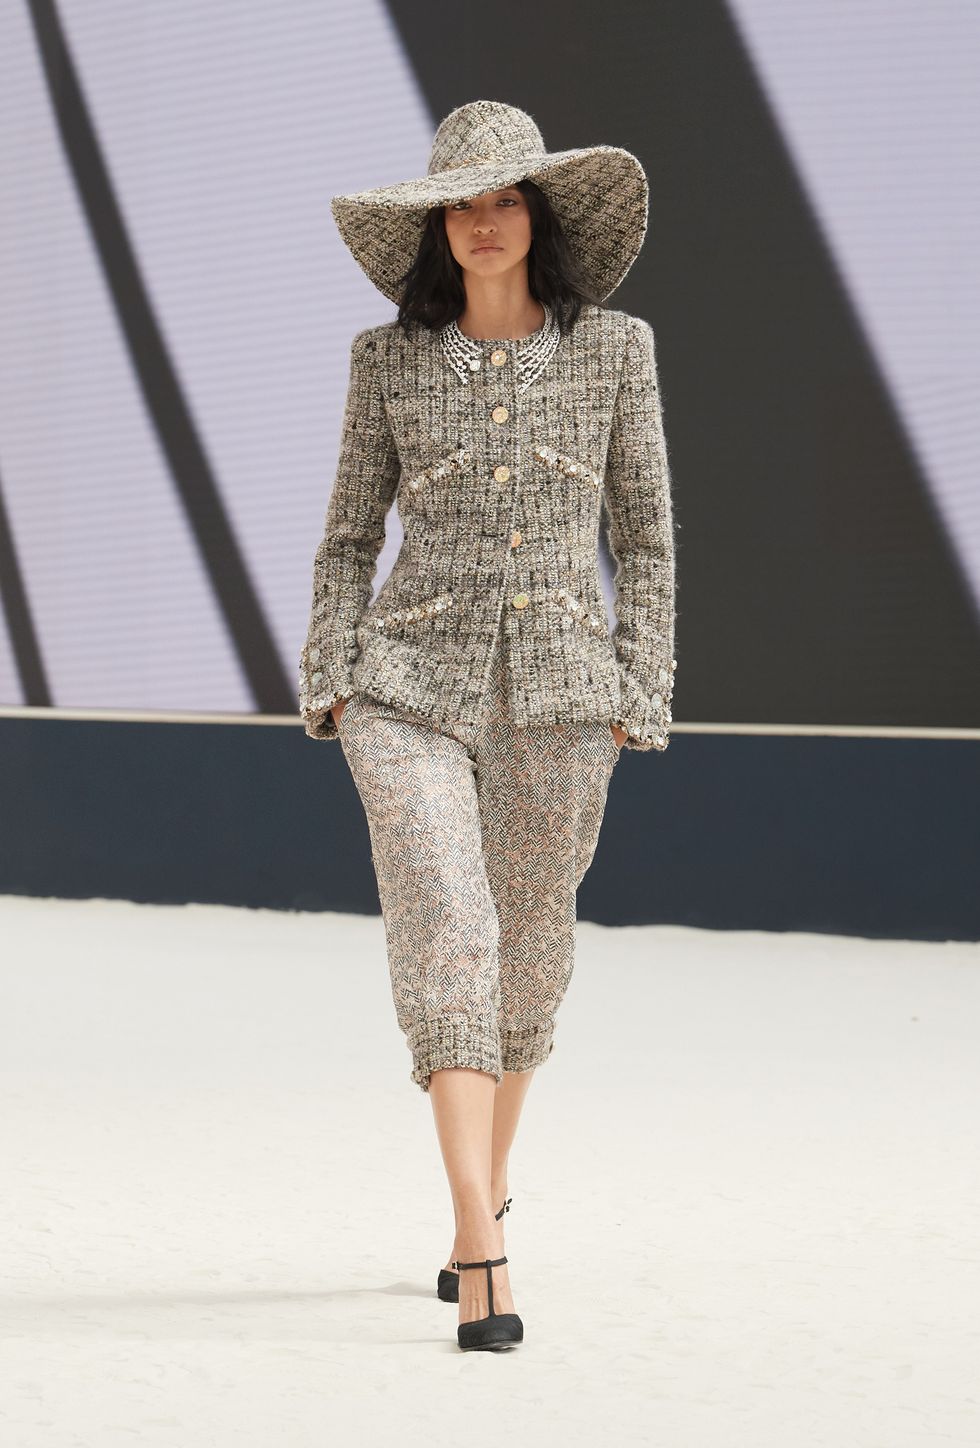 Schiaparelli Haute Couture SS22 collection review